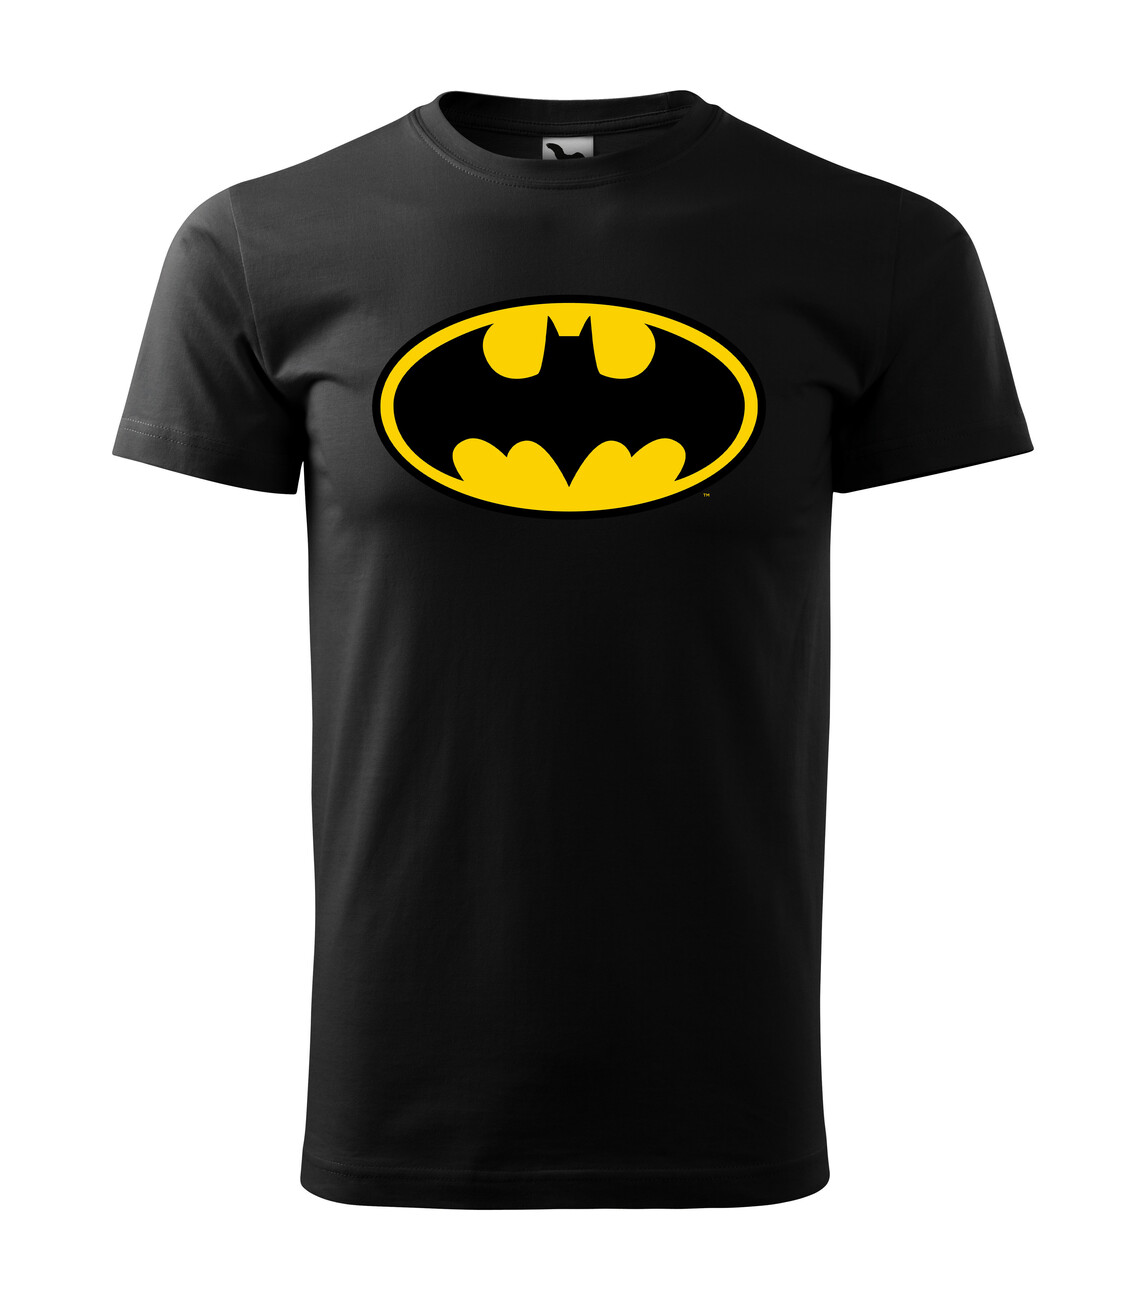 Batman - Logo | Clothes for fans accessories and merchandise